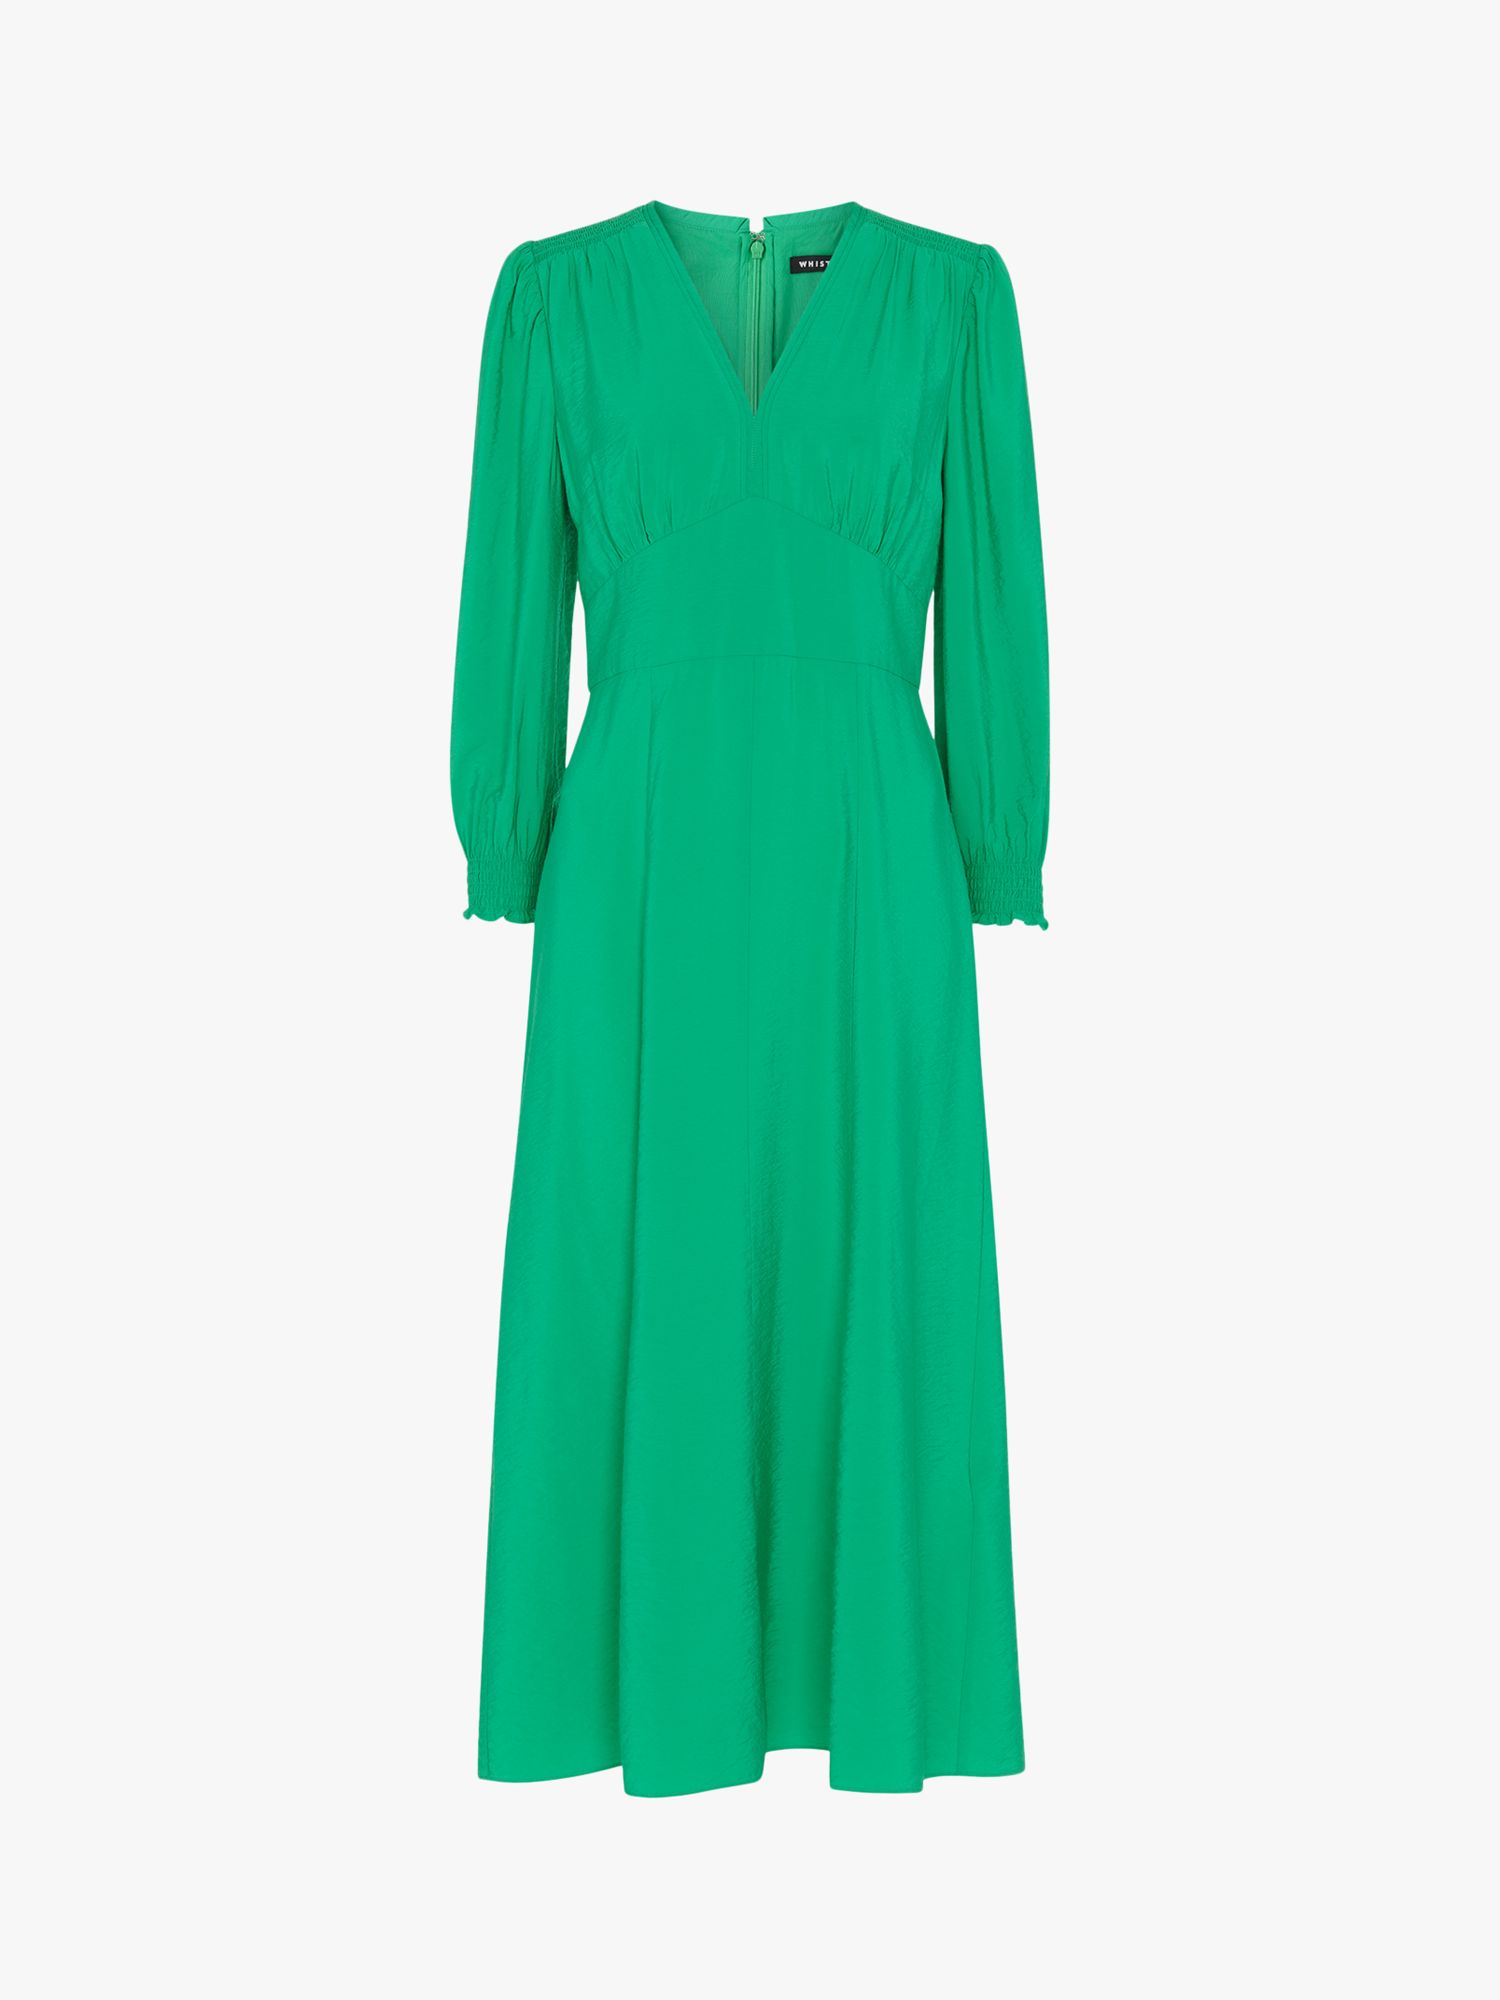 Whistles Sula Midi Dress, Green, 8